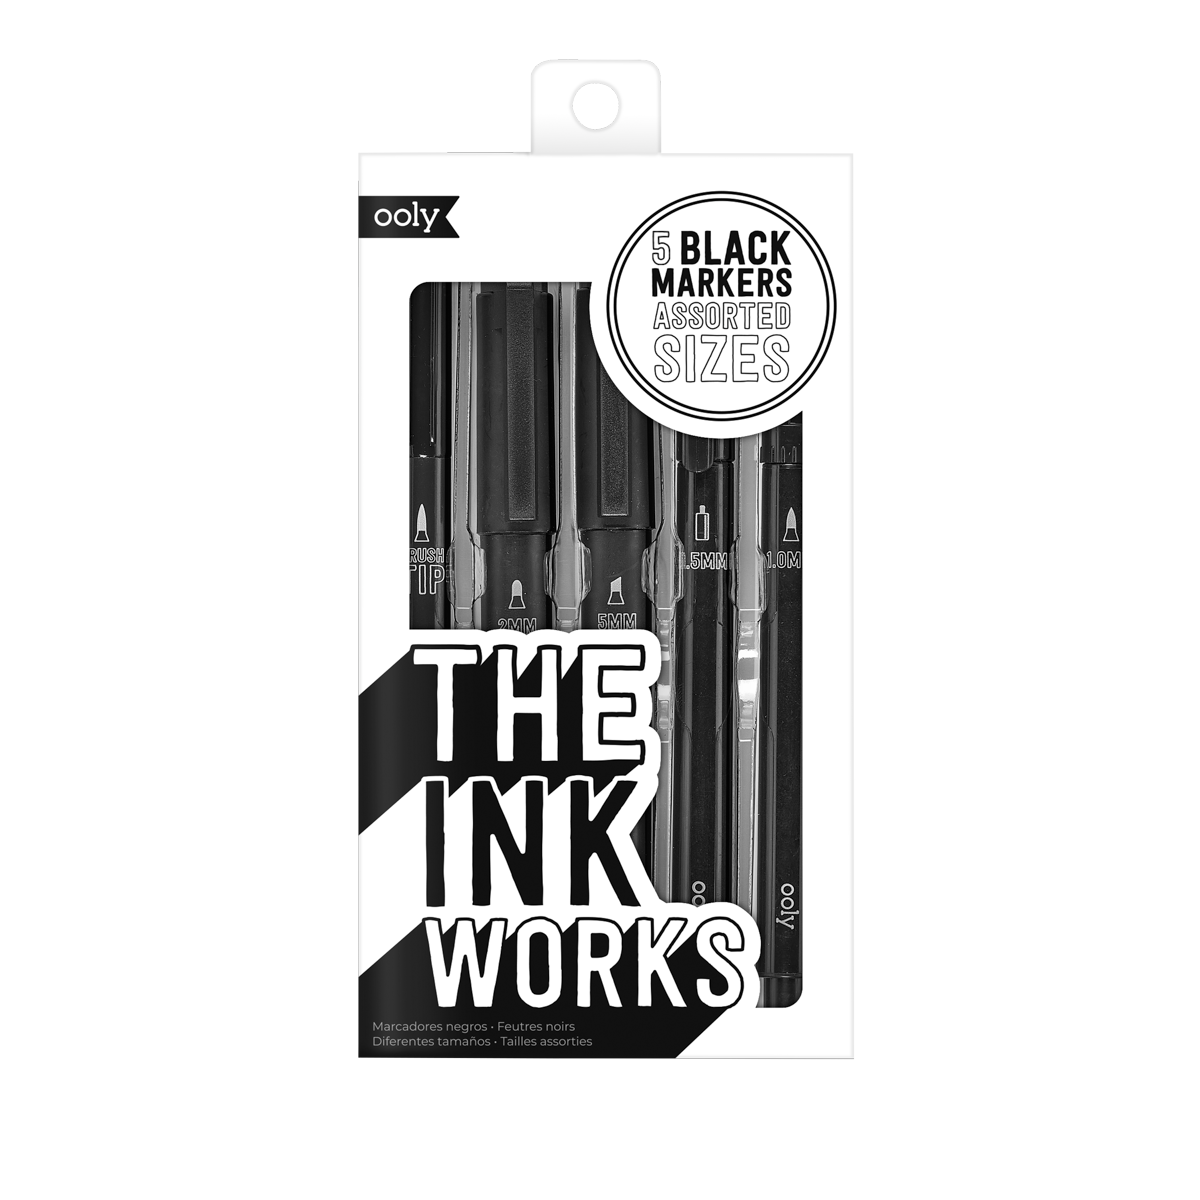 A-Ink Rotuladores pastel